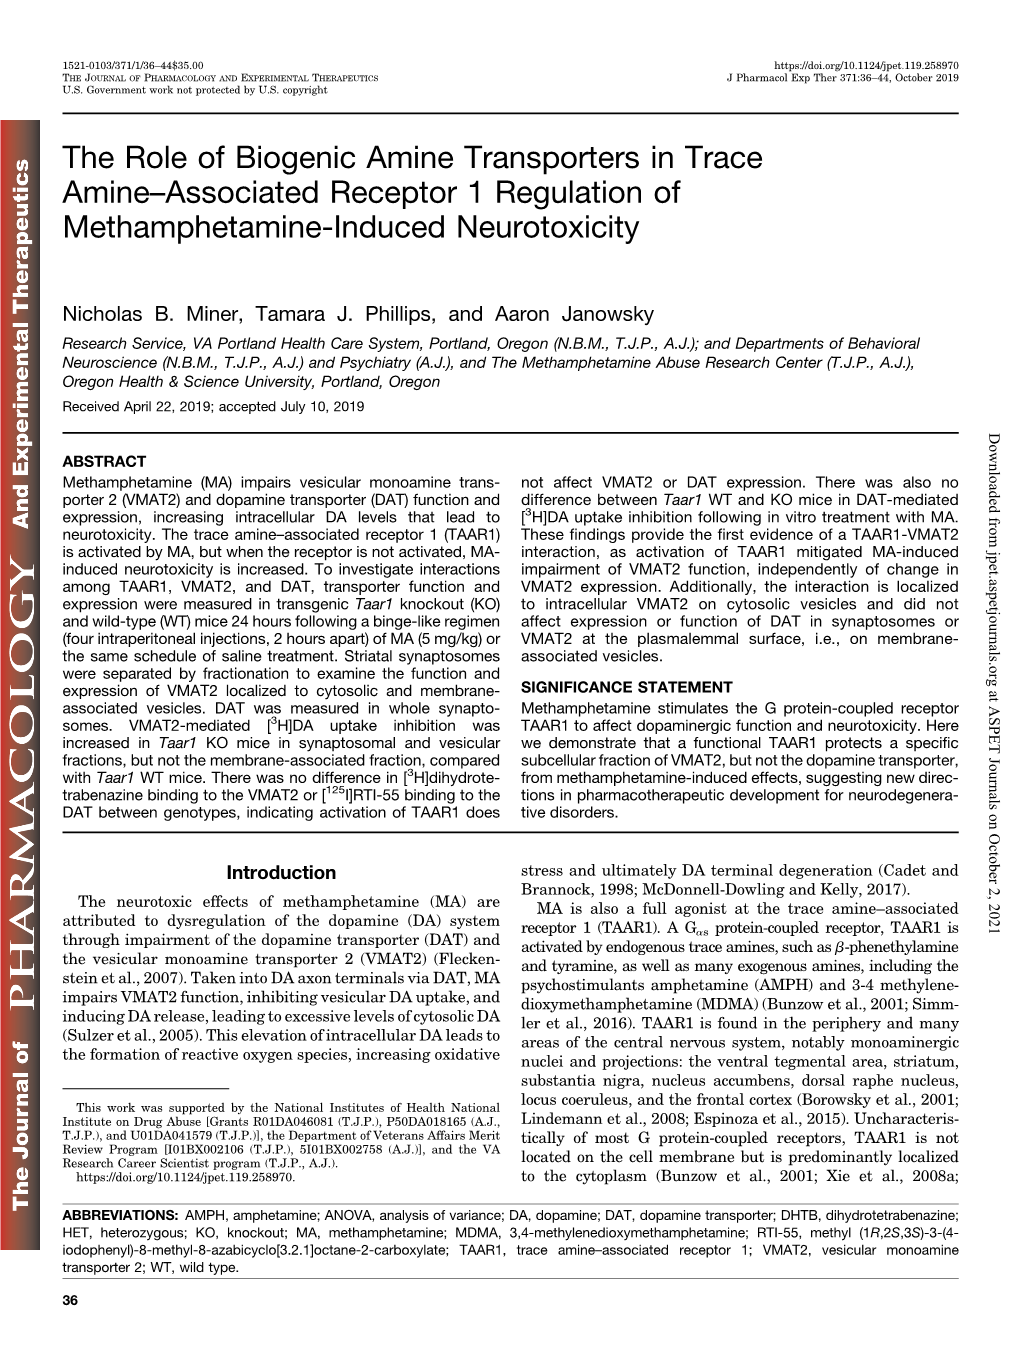 The Role of Biogenic Amine Transporters in Trace Amine–Associated Receptor 1 Regulation of Methamphetamine-Induced Neurotoxicity